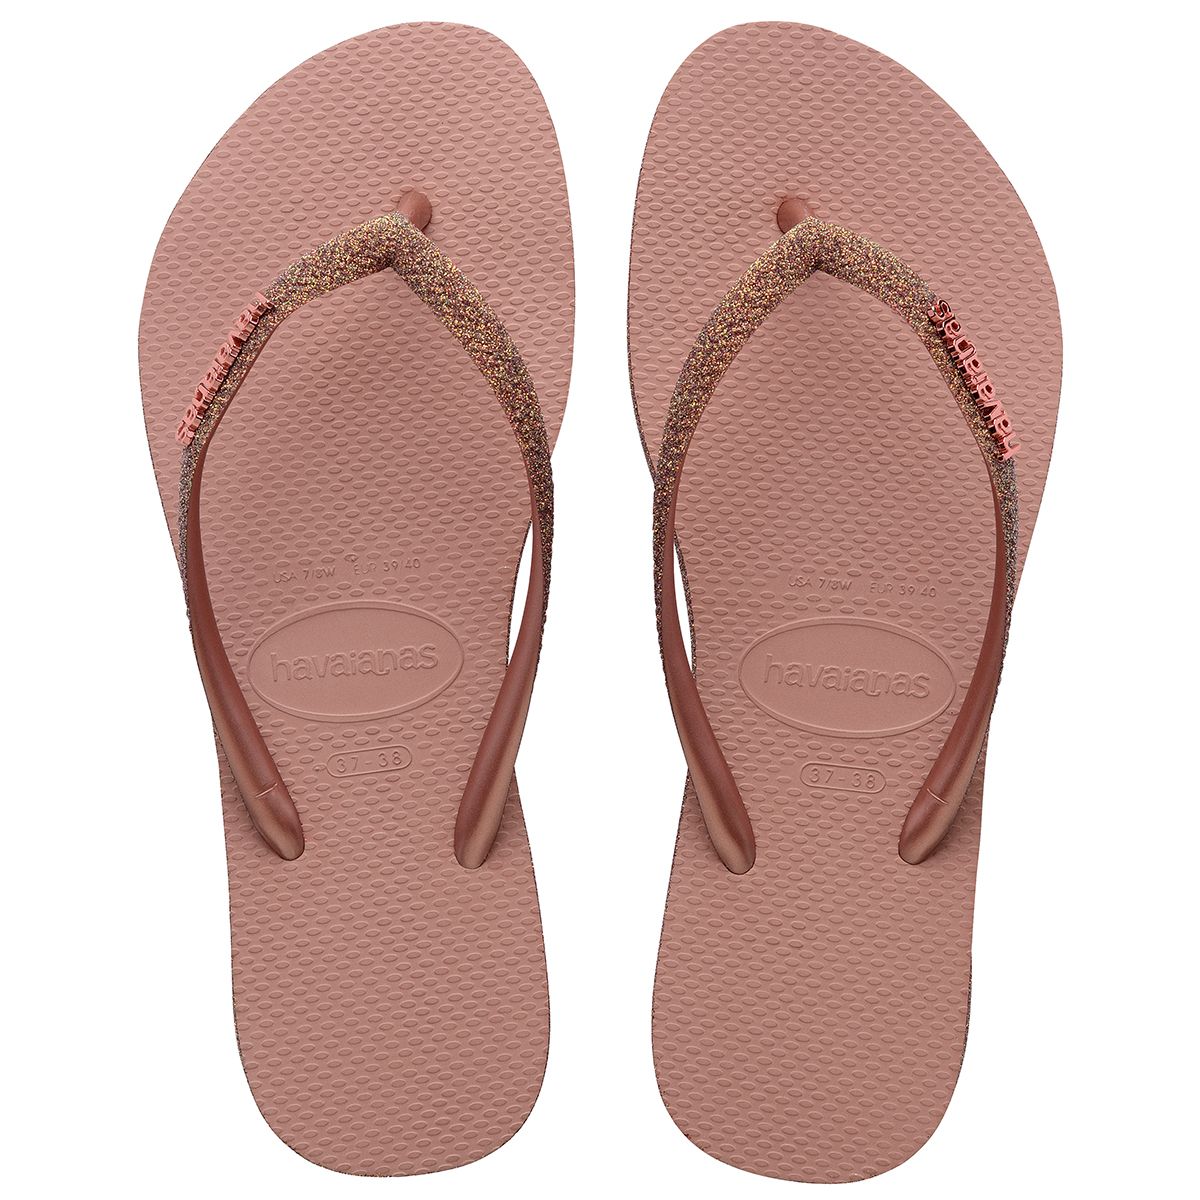 Havaianas Slim Sparkle 2 Womens Sandal 3544-Crocus Rose 7